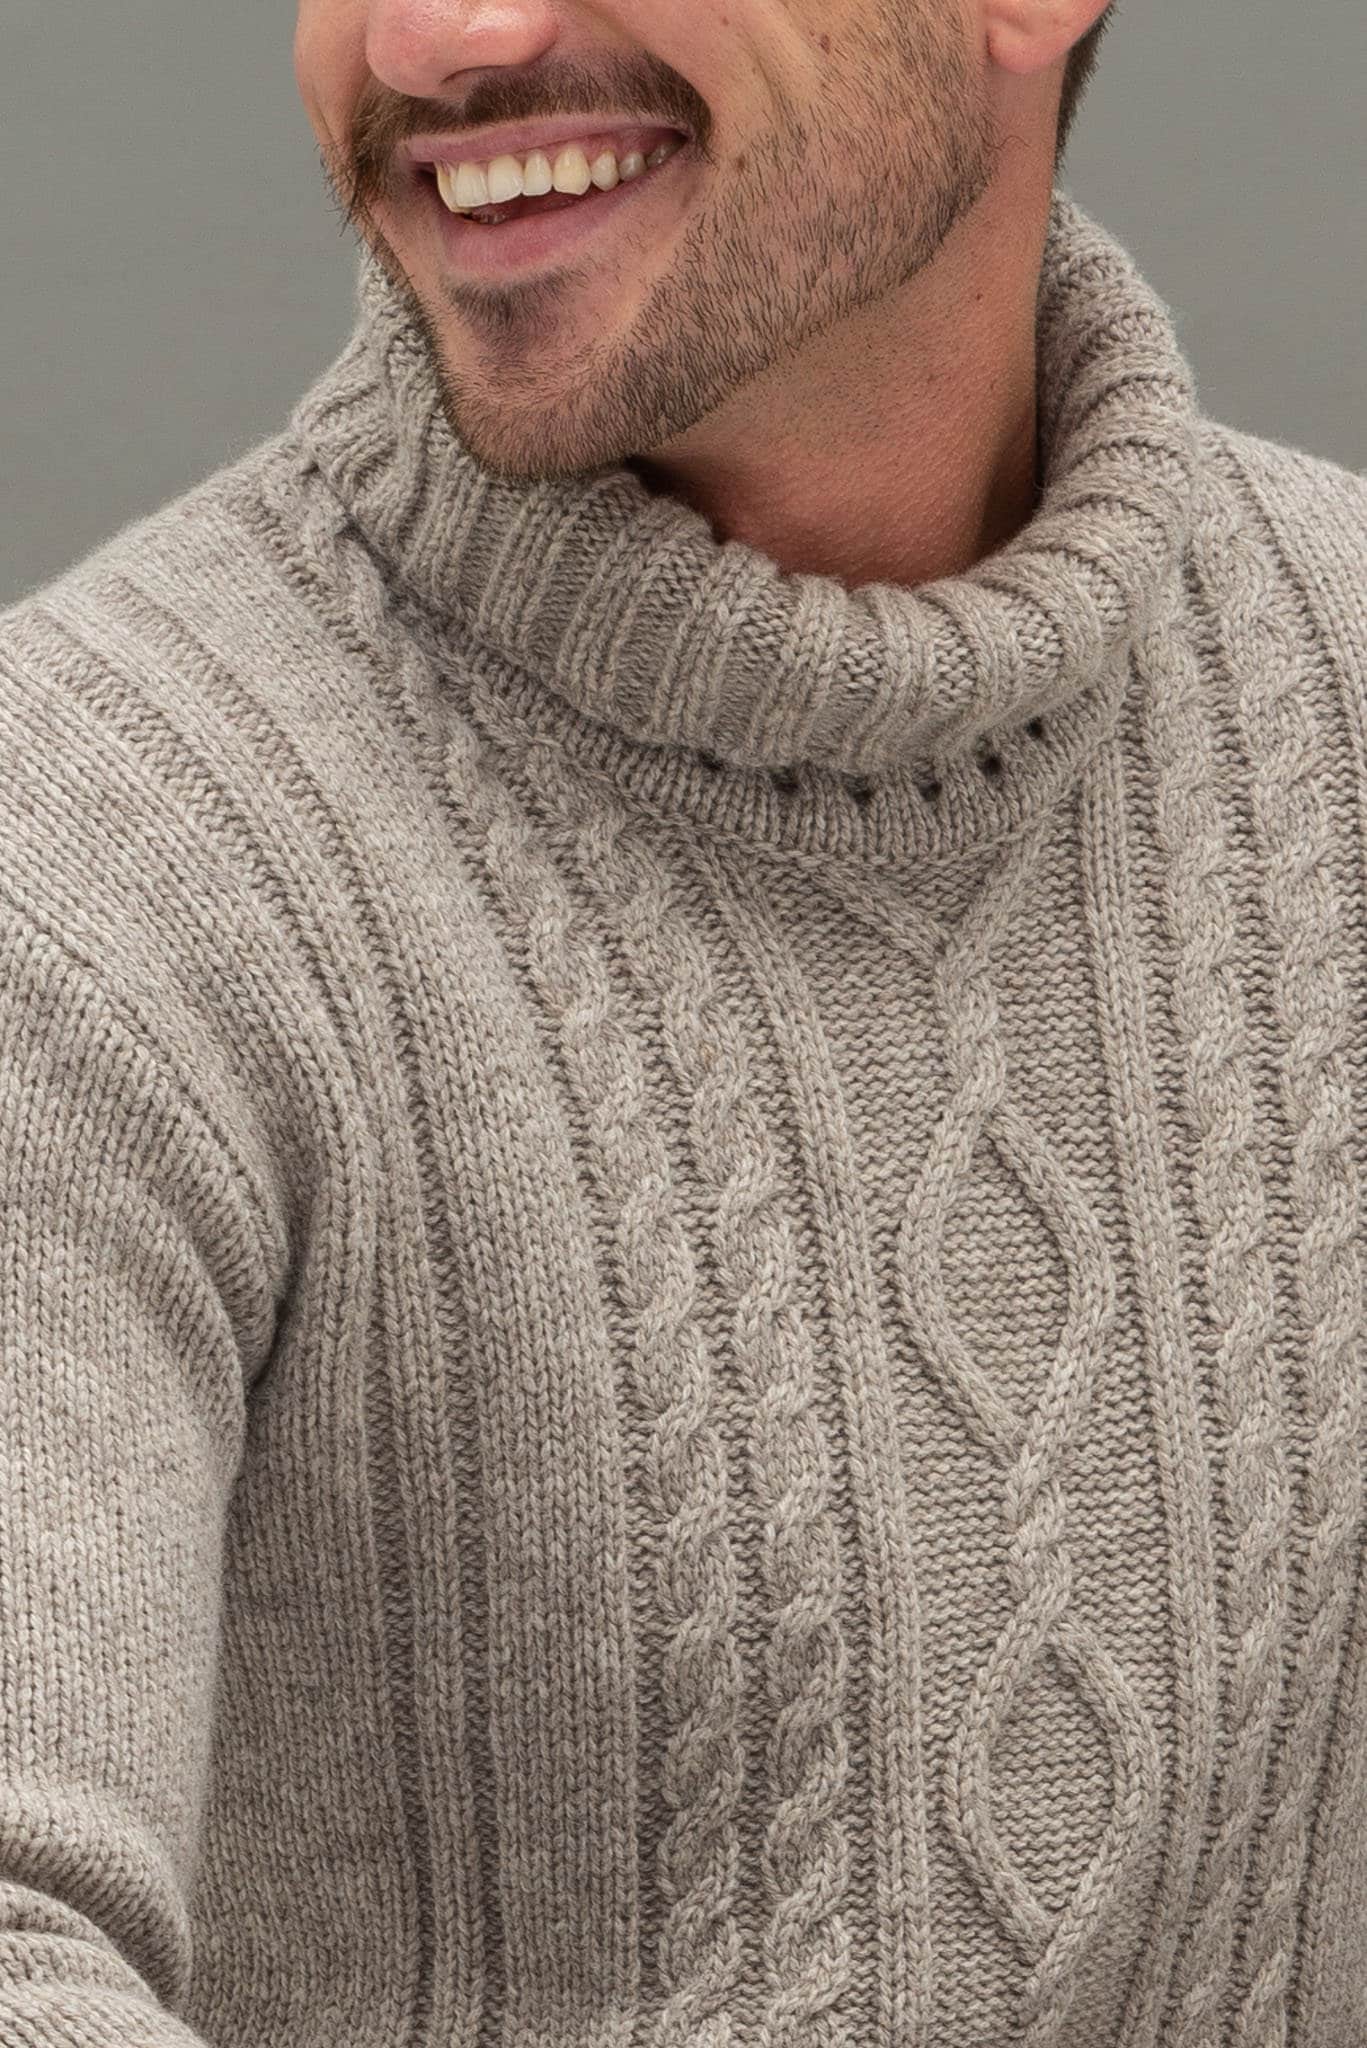 Merino Wool Turtleneck Sweater, Men's Turtleneck, Natural Wool Turtleneck  Top, Hand Knitted Pullover HUGO 